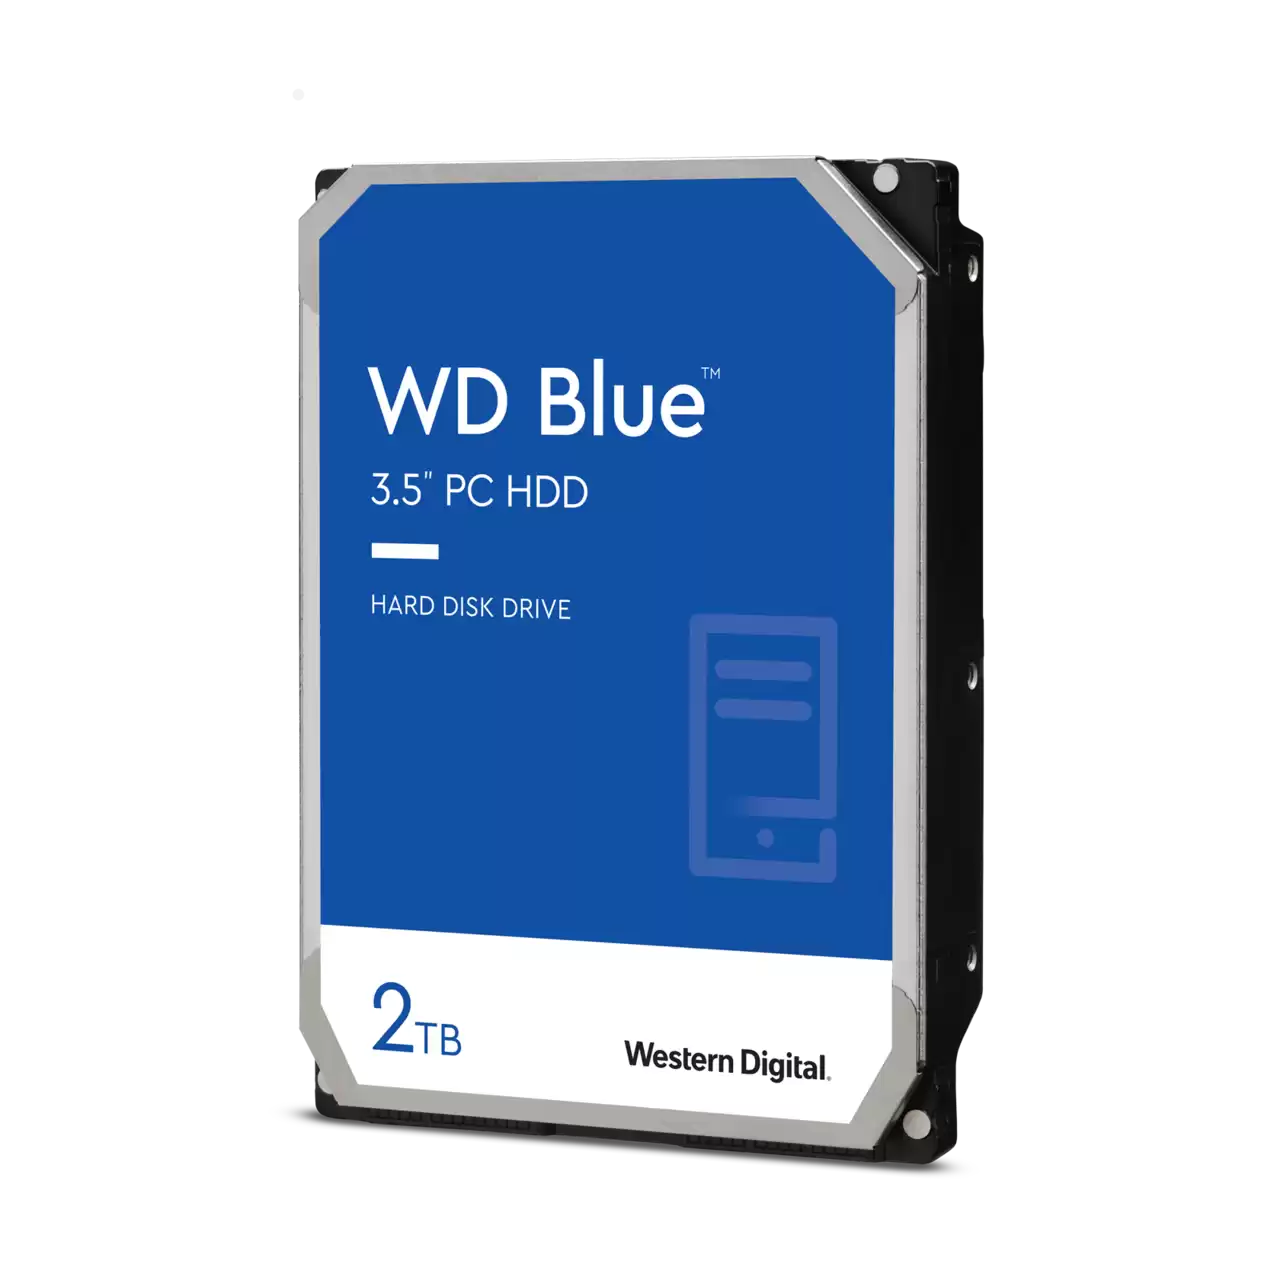 Western Digital WD Blue 3.5" PC HDD - WD20EZAZ (256 MB, 5400 rpm, 2 TB)